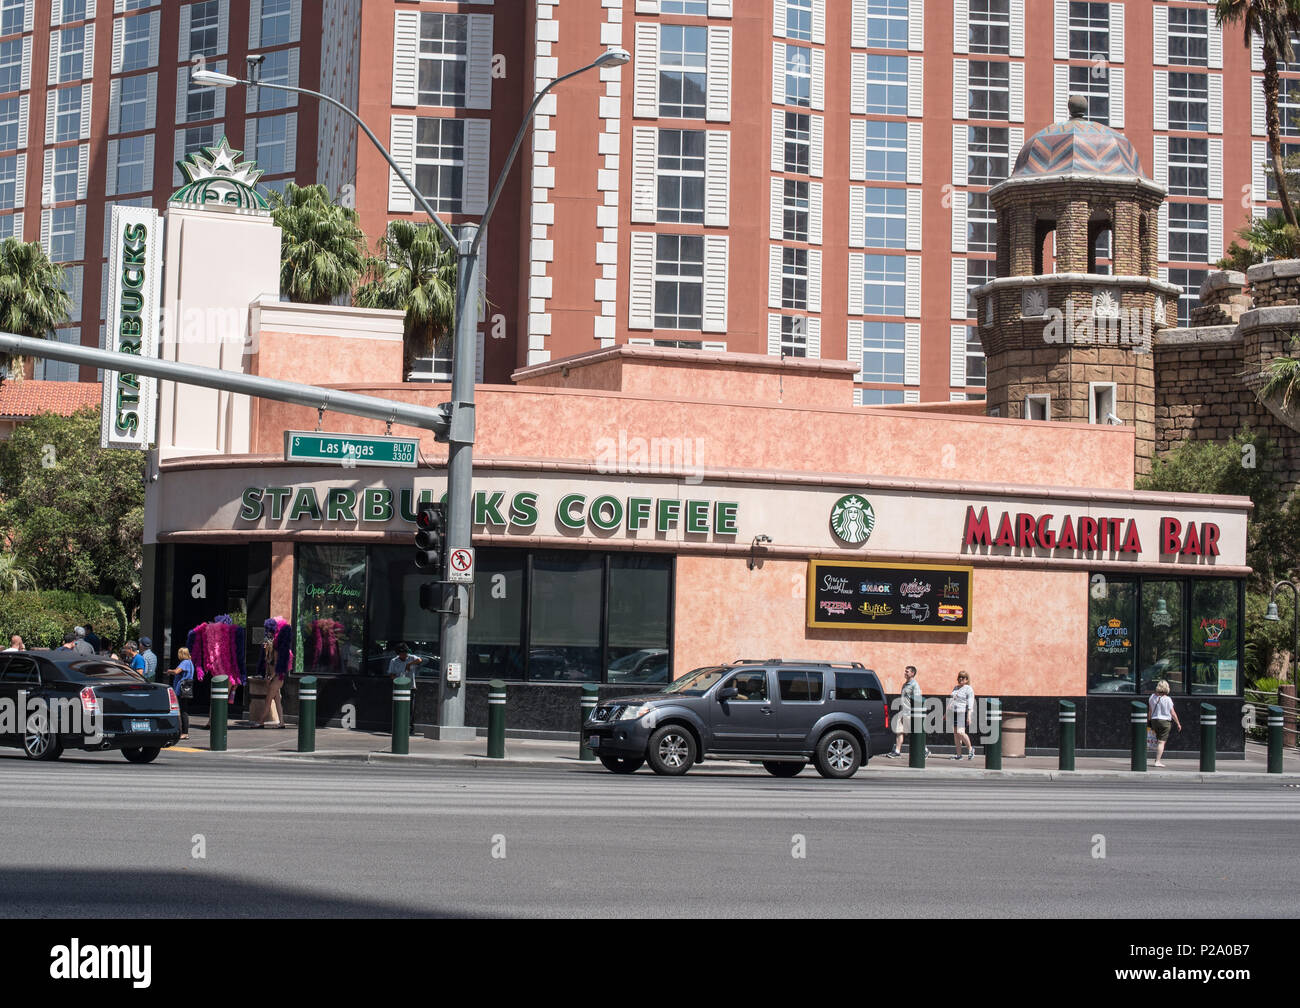 Coffee in Las Vegas - Starbucks Coffee - Palace Station